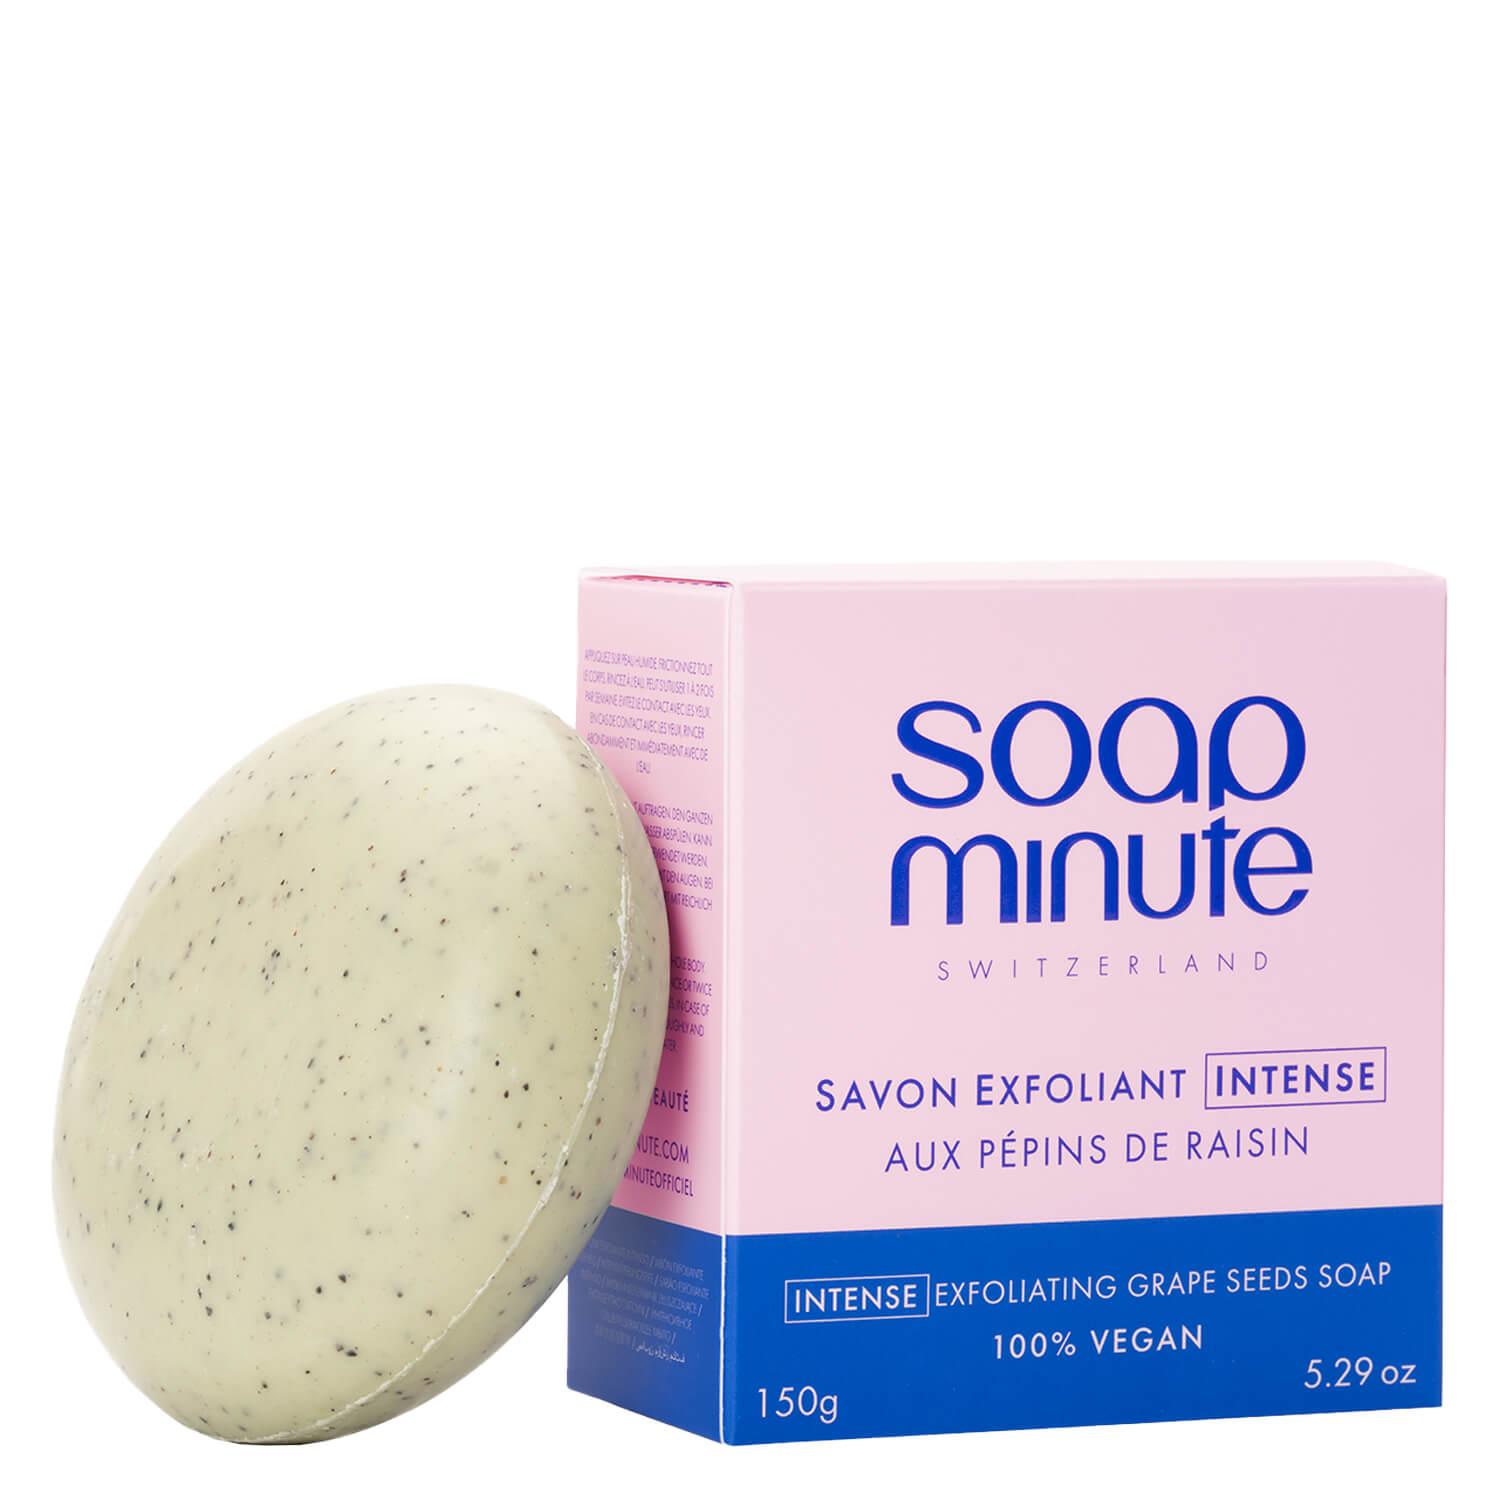 soapminute - Savon Exfoliant Intense aux Pepins de Raisin